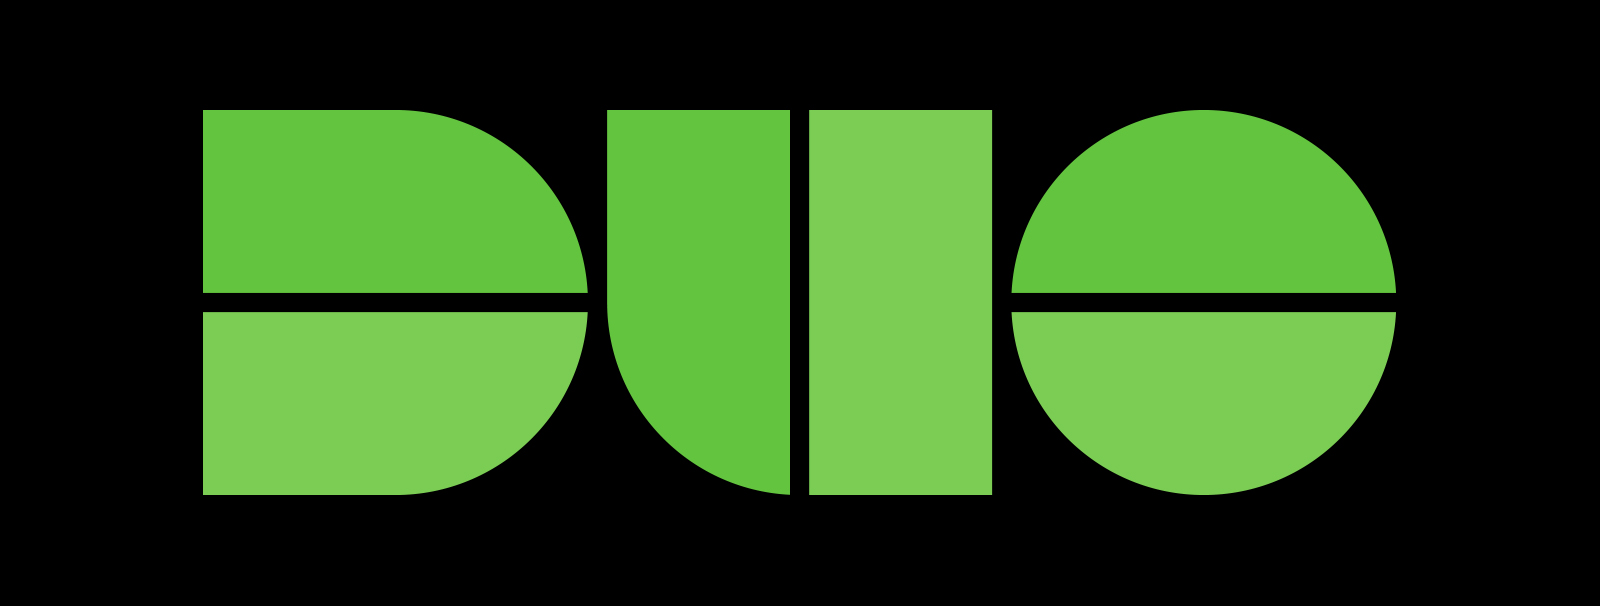 Cisco Duo Logo